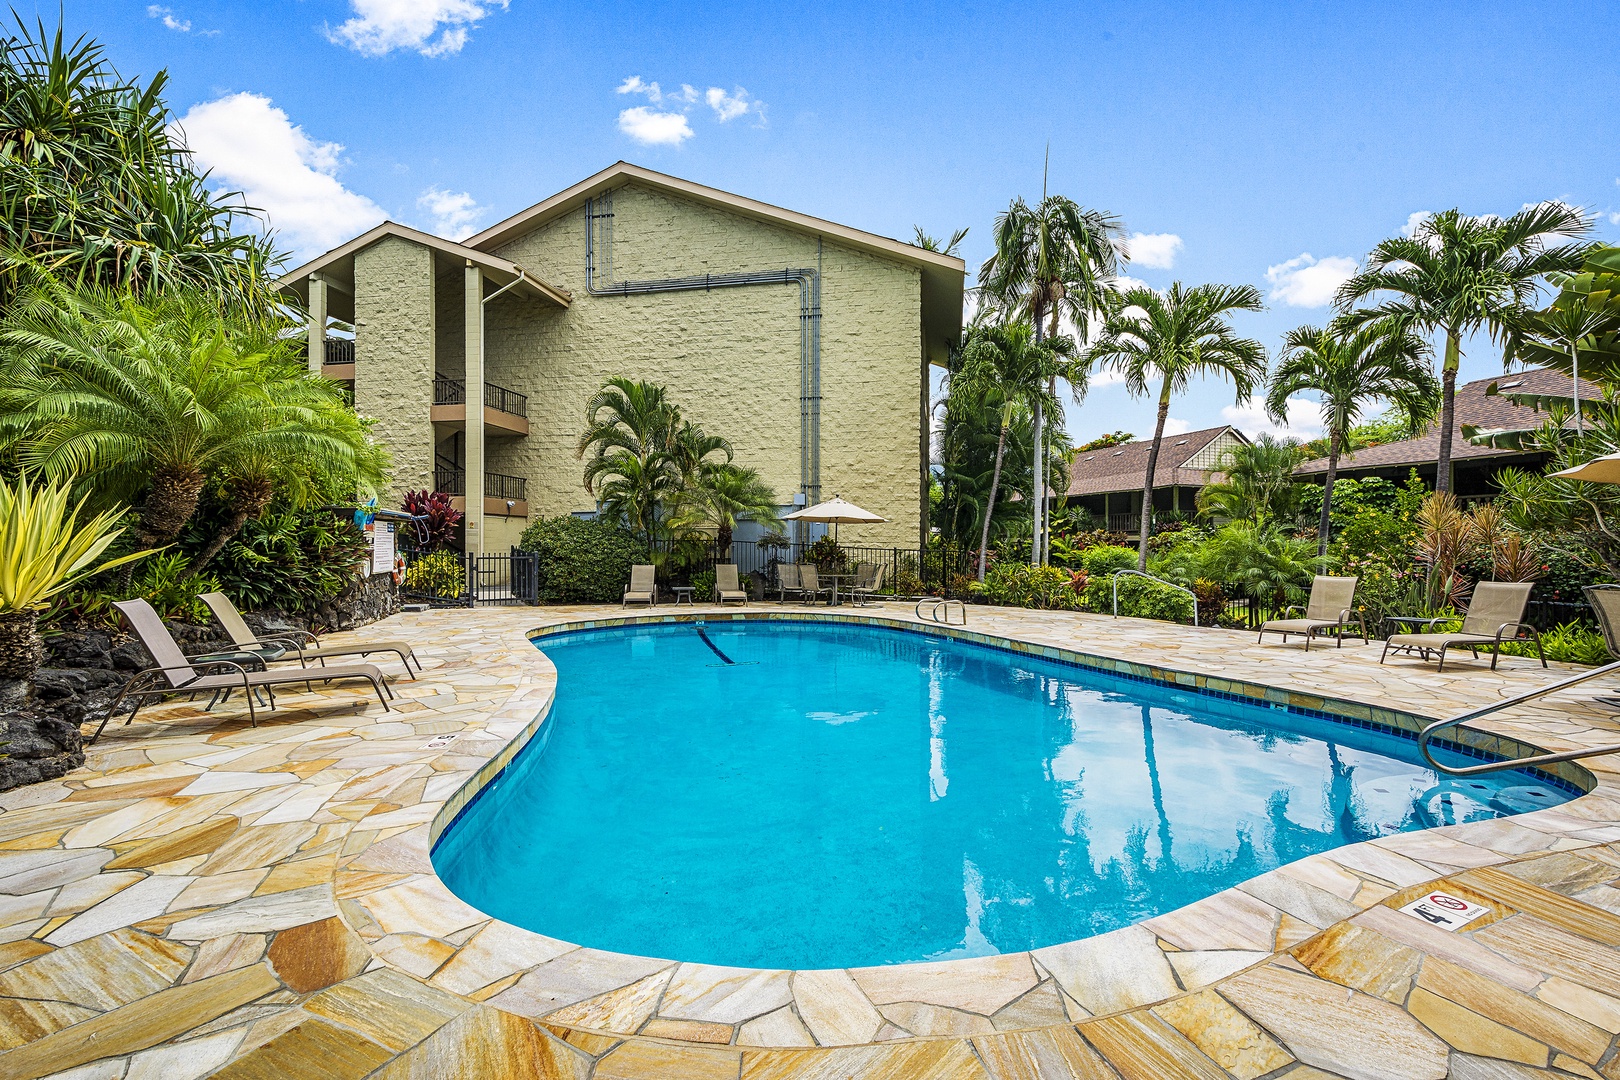 Kailua Kona Vacation Rentals, Kalanikai 306 - Complex pool area